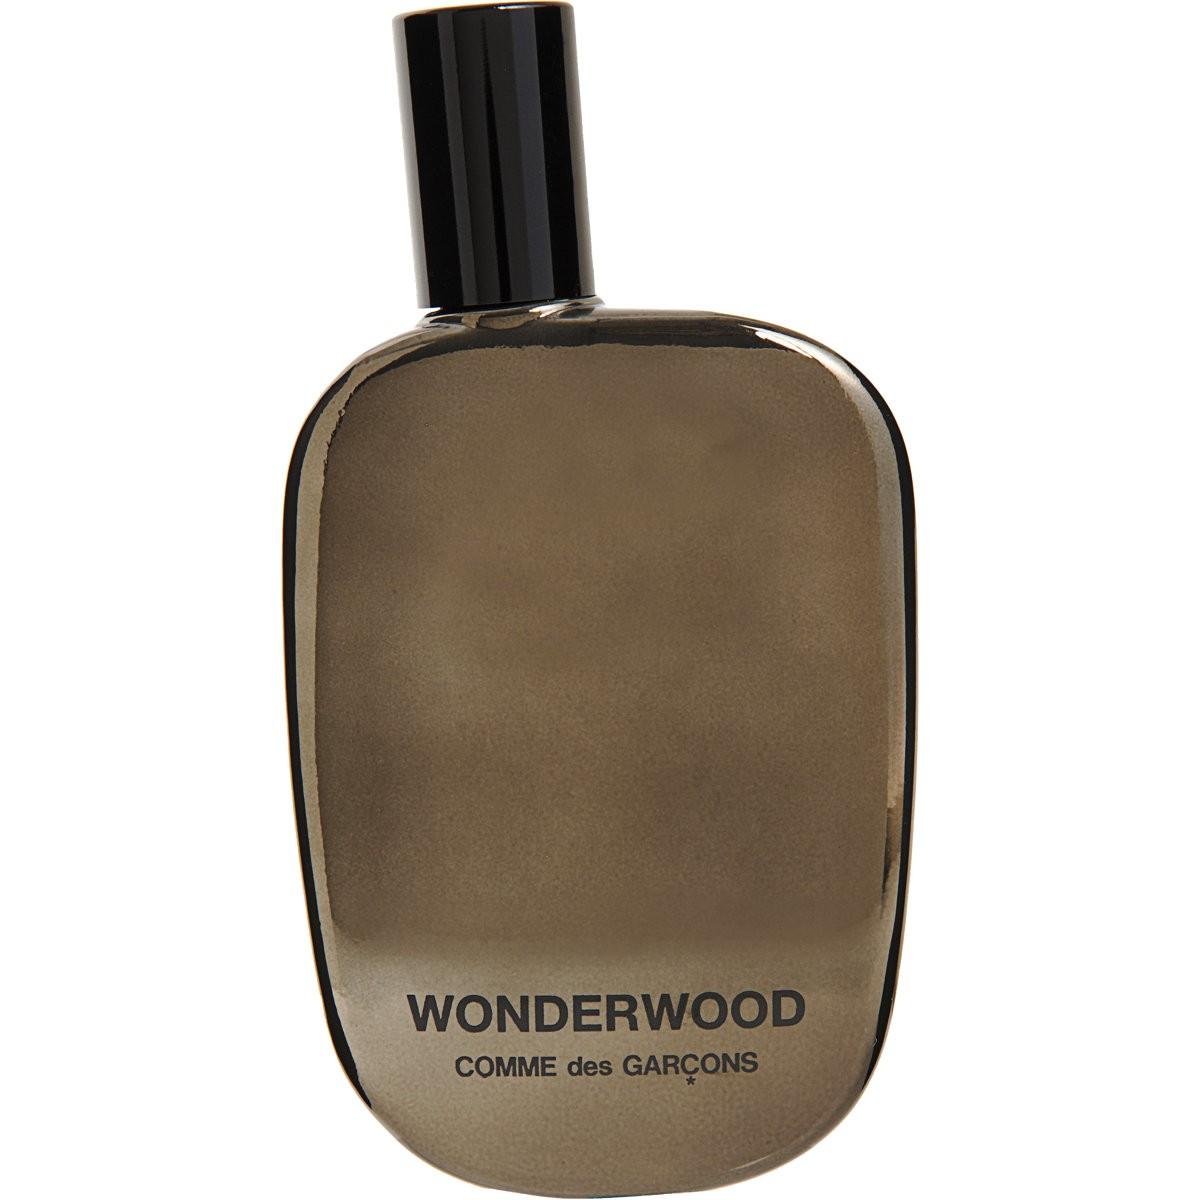 comme des garcons wonderwood woda perfumowana 1 ml   